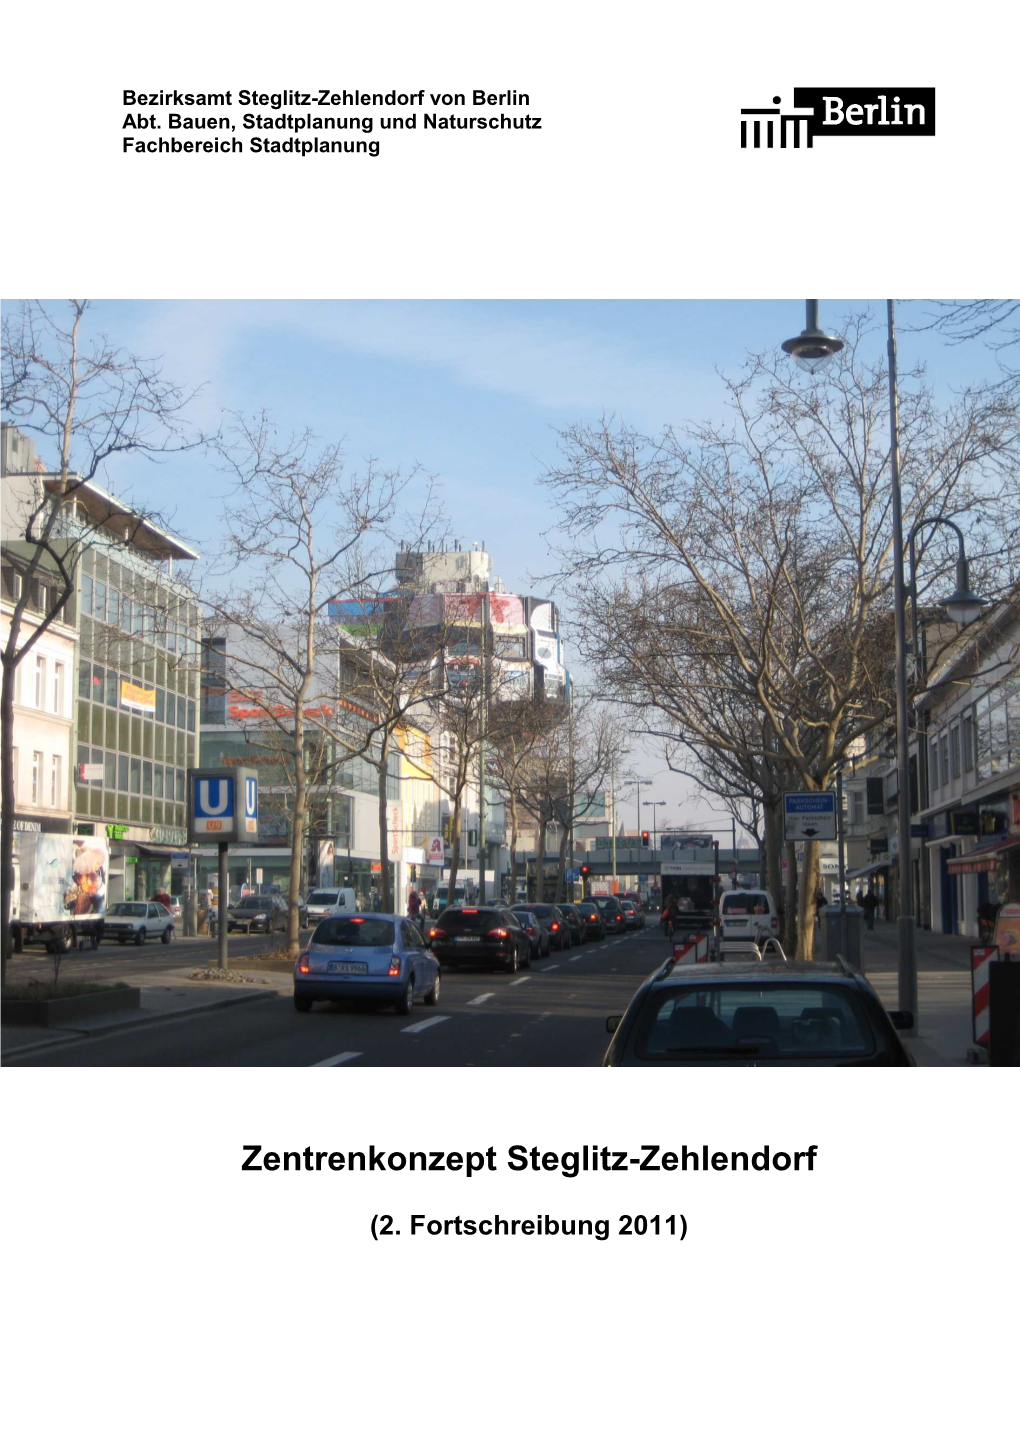 Zentrenkonzept Steglitz-Zehlendorf